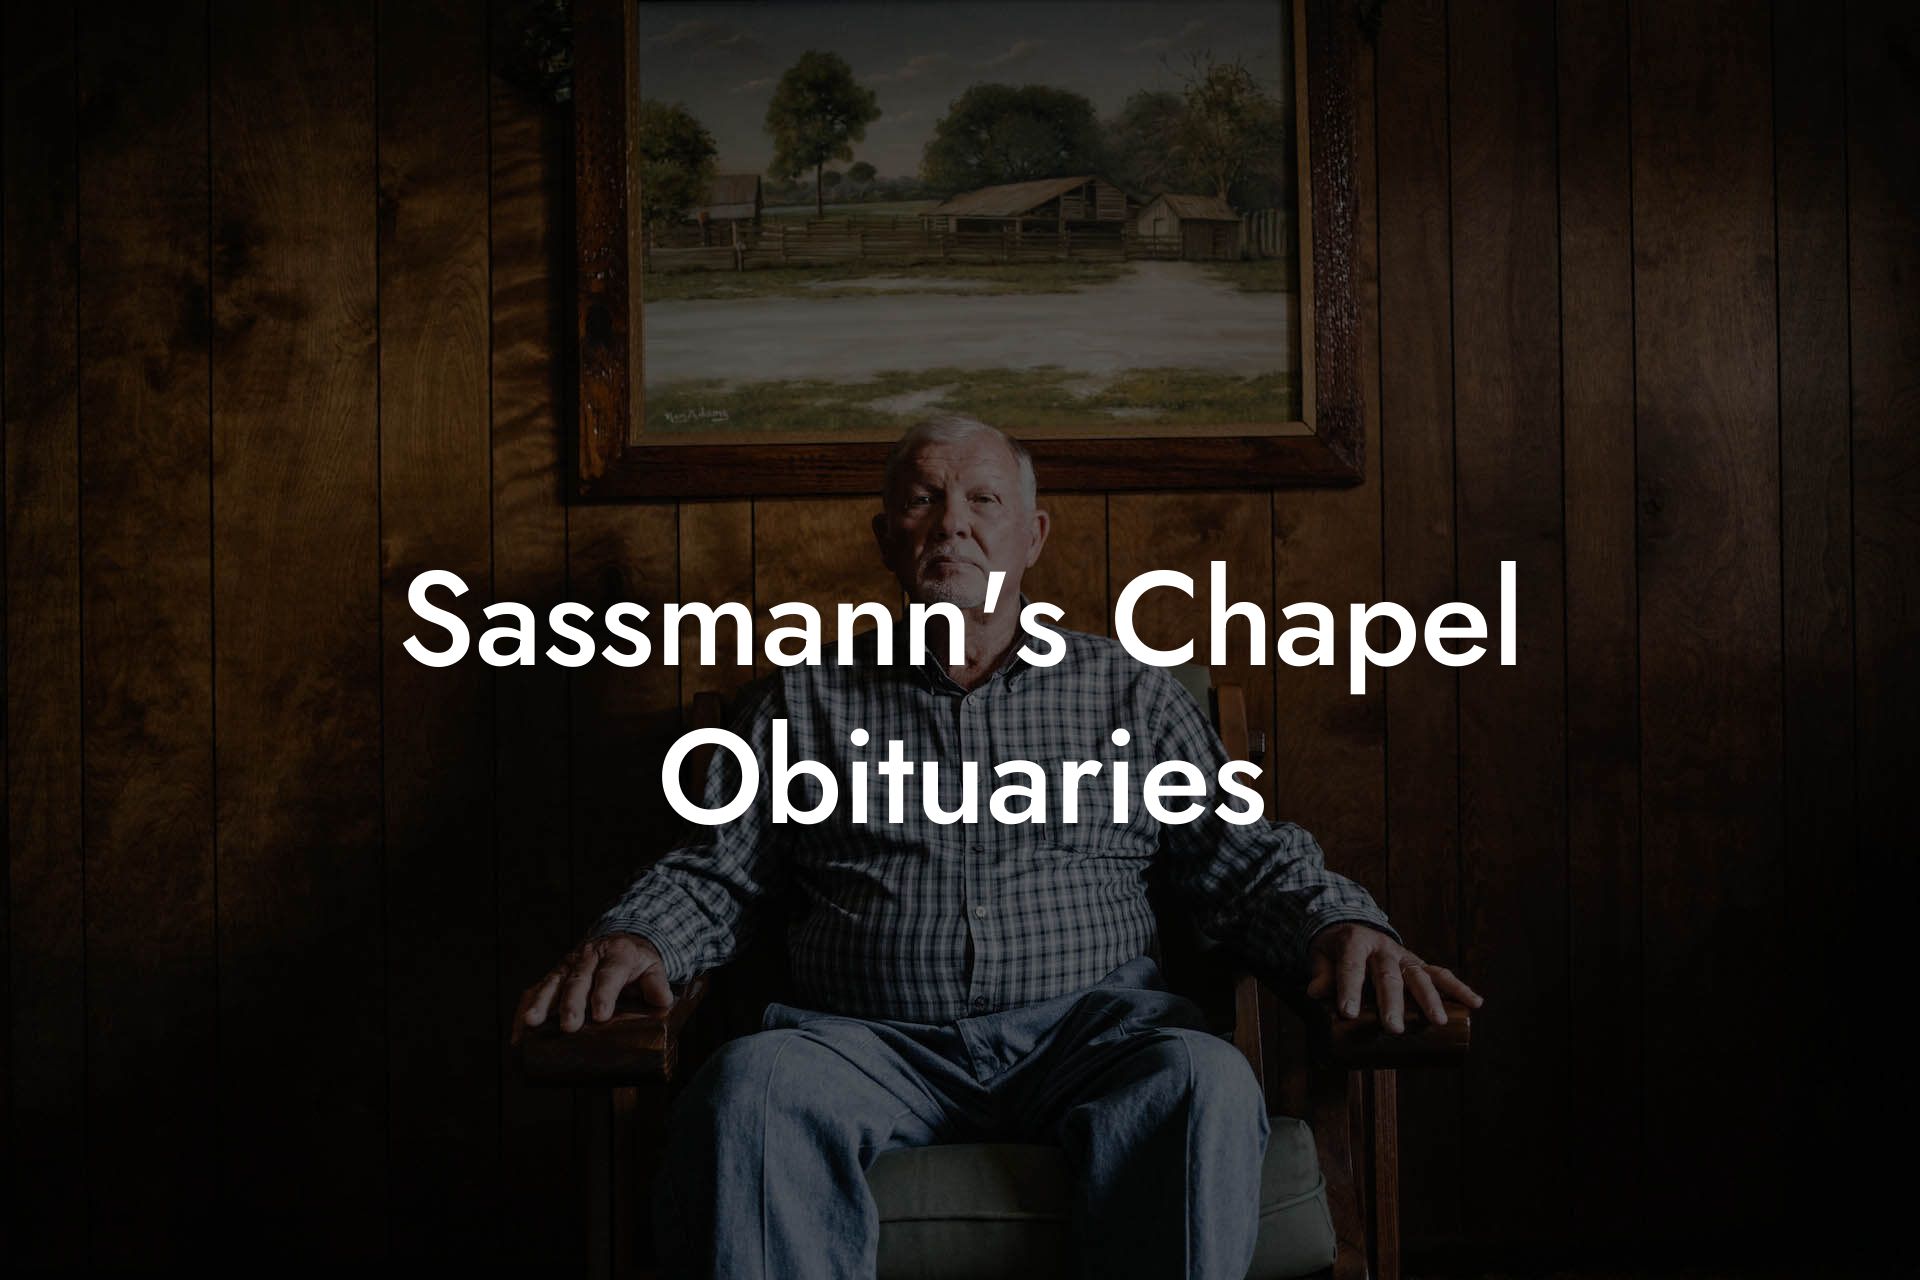 Sassmann's Chapel Obituaries